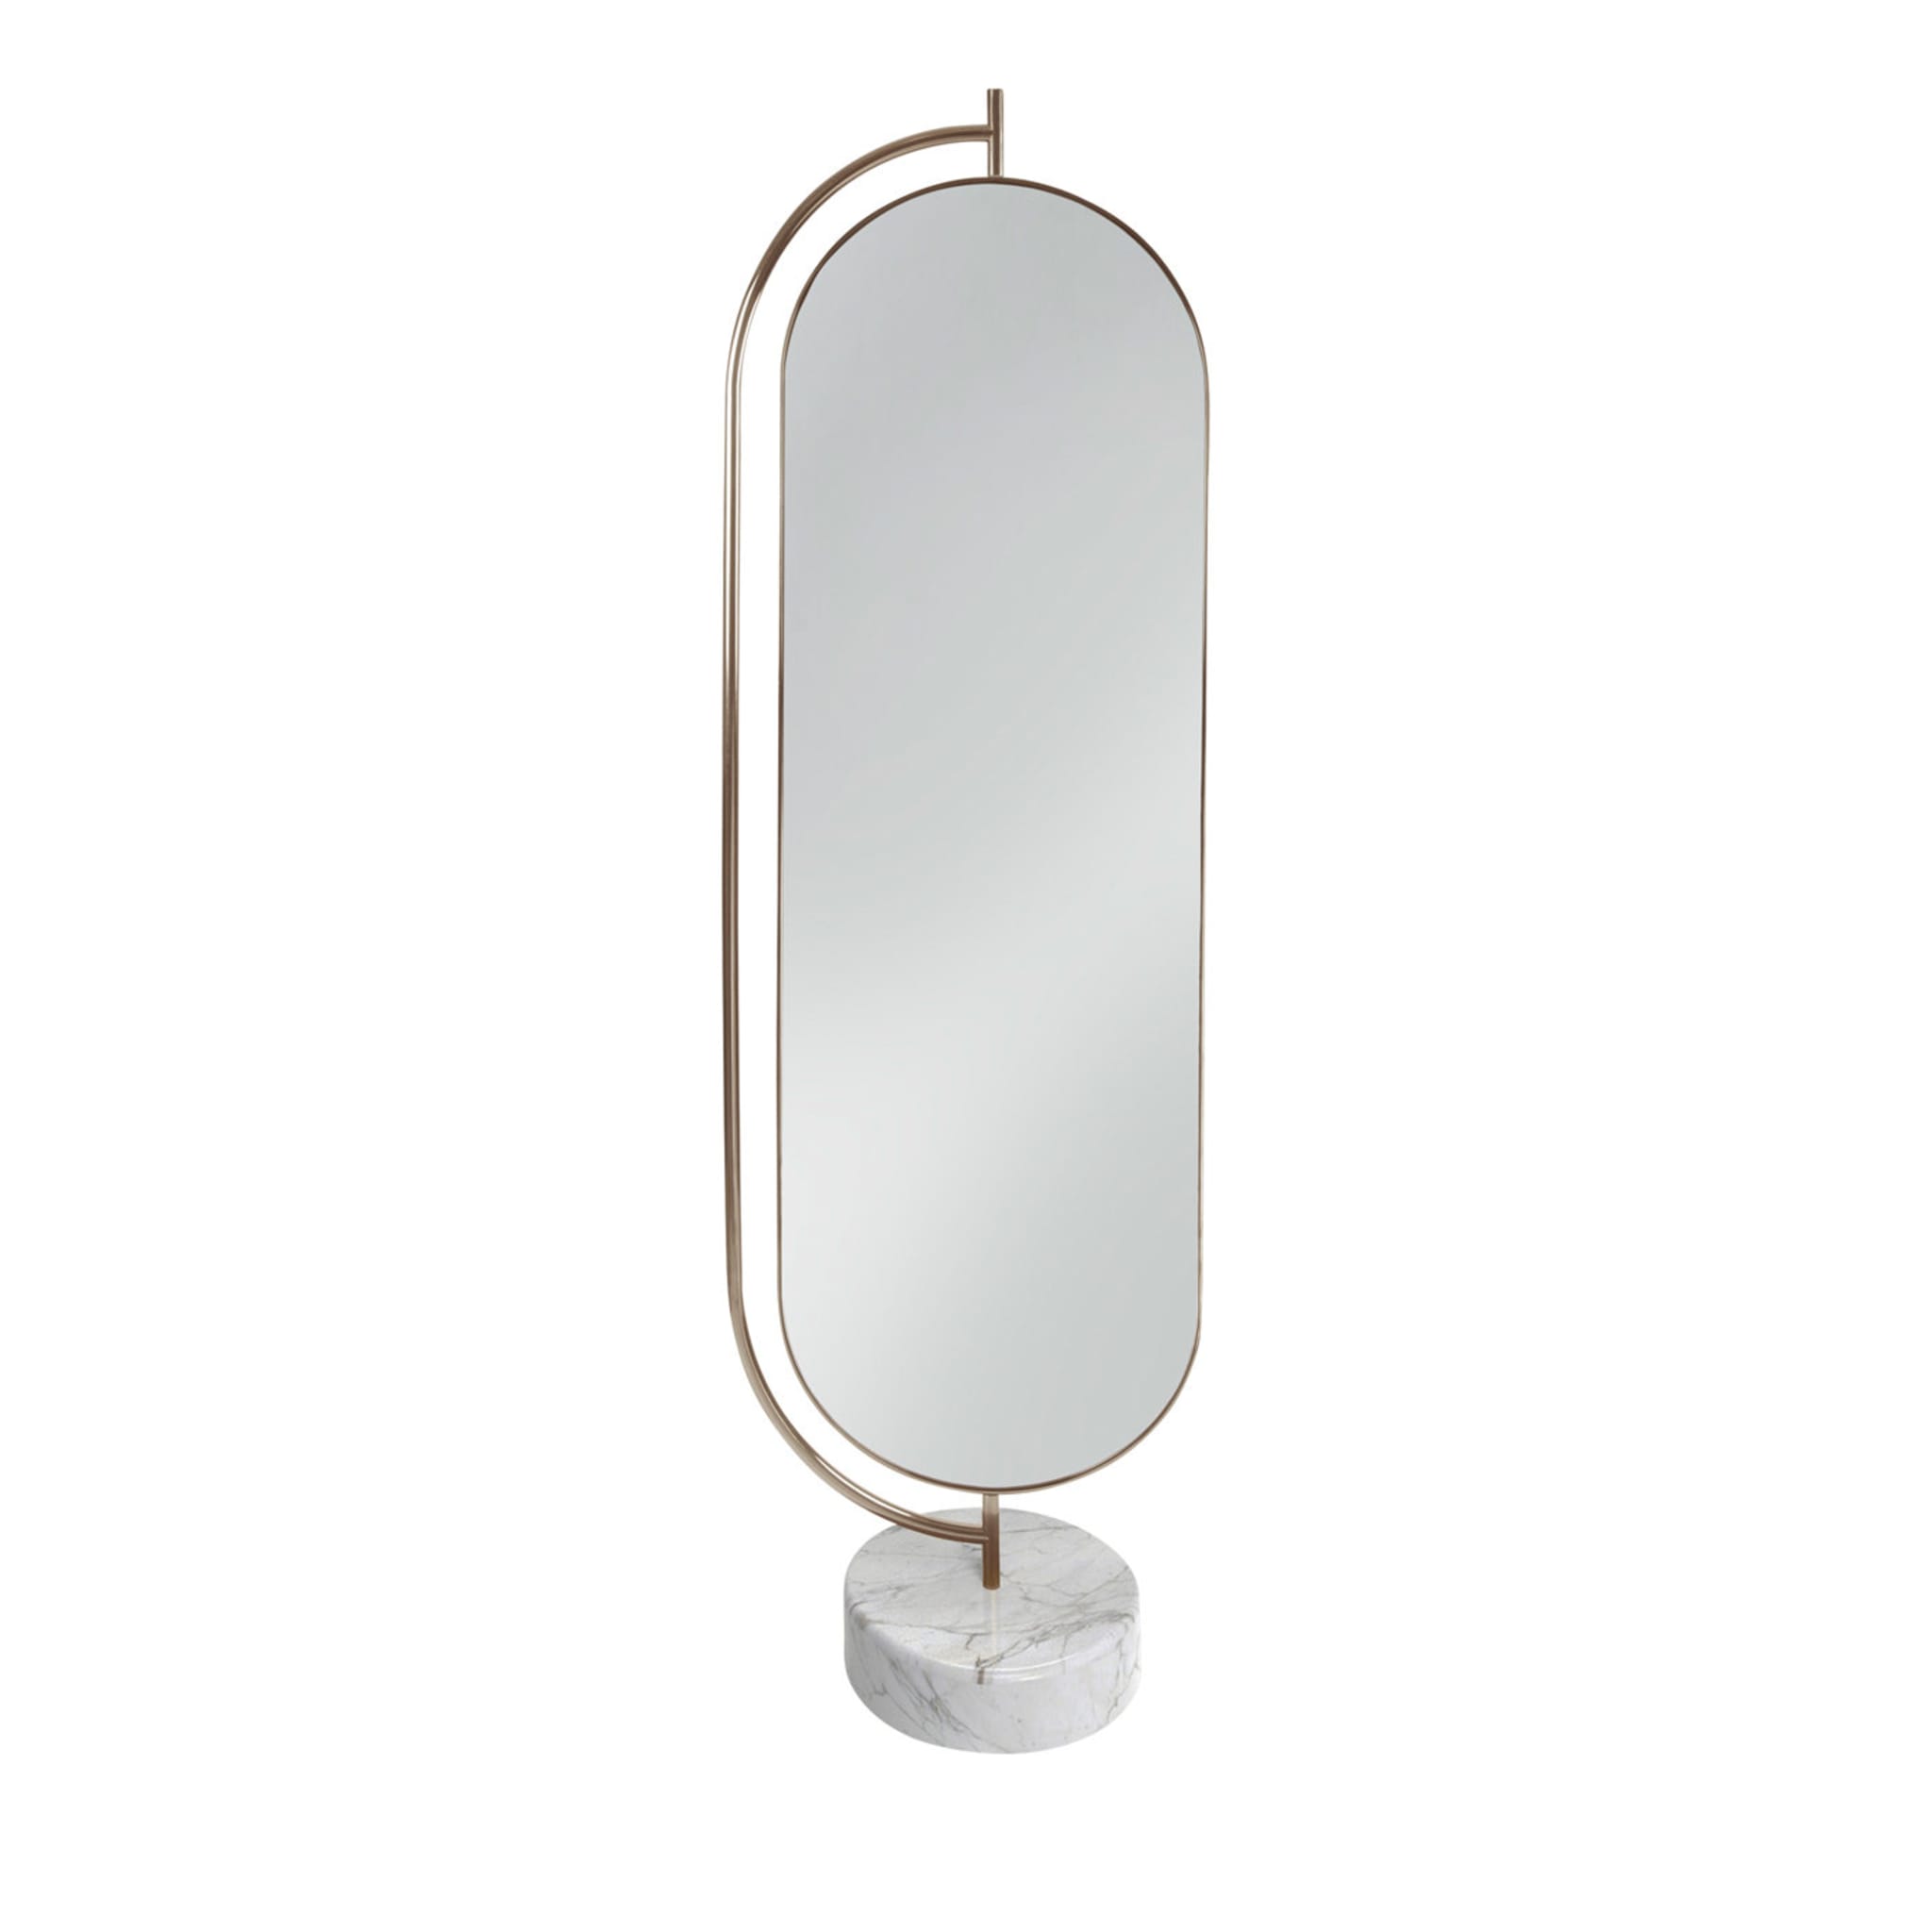 Giove Mirror with Calacatta Oro Marble - Main view